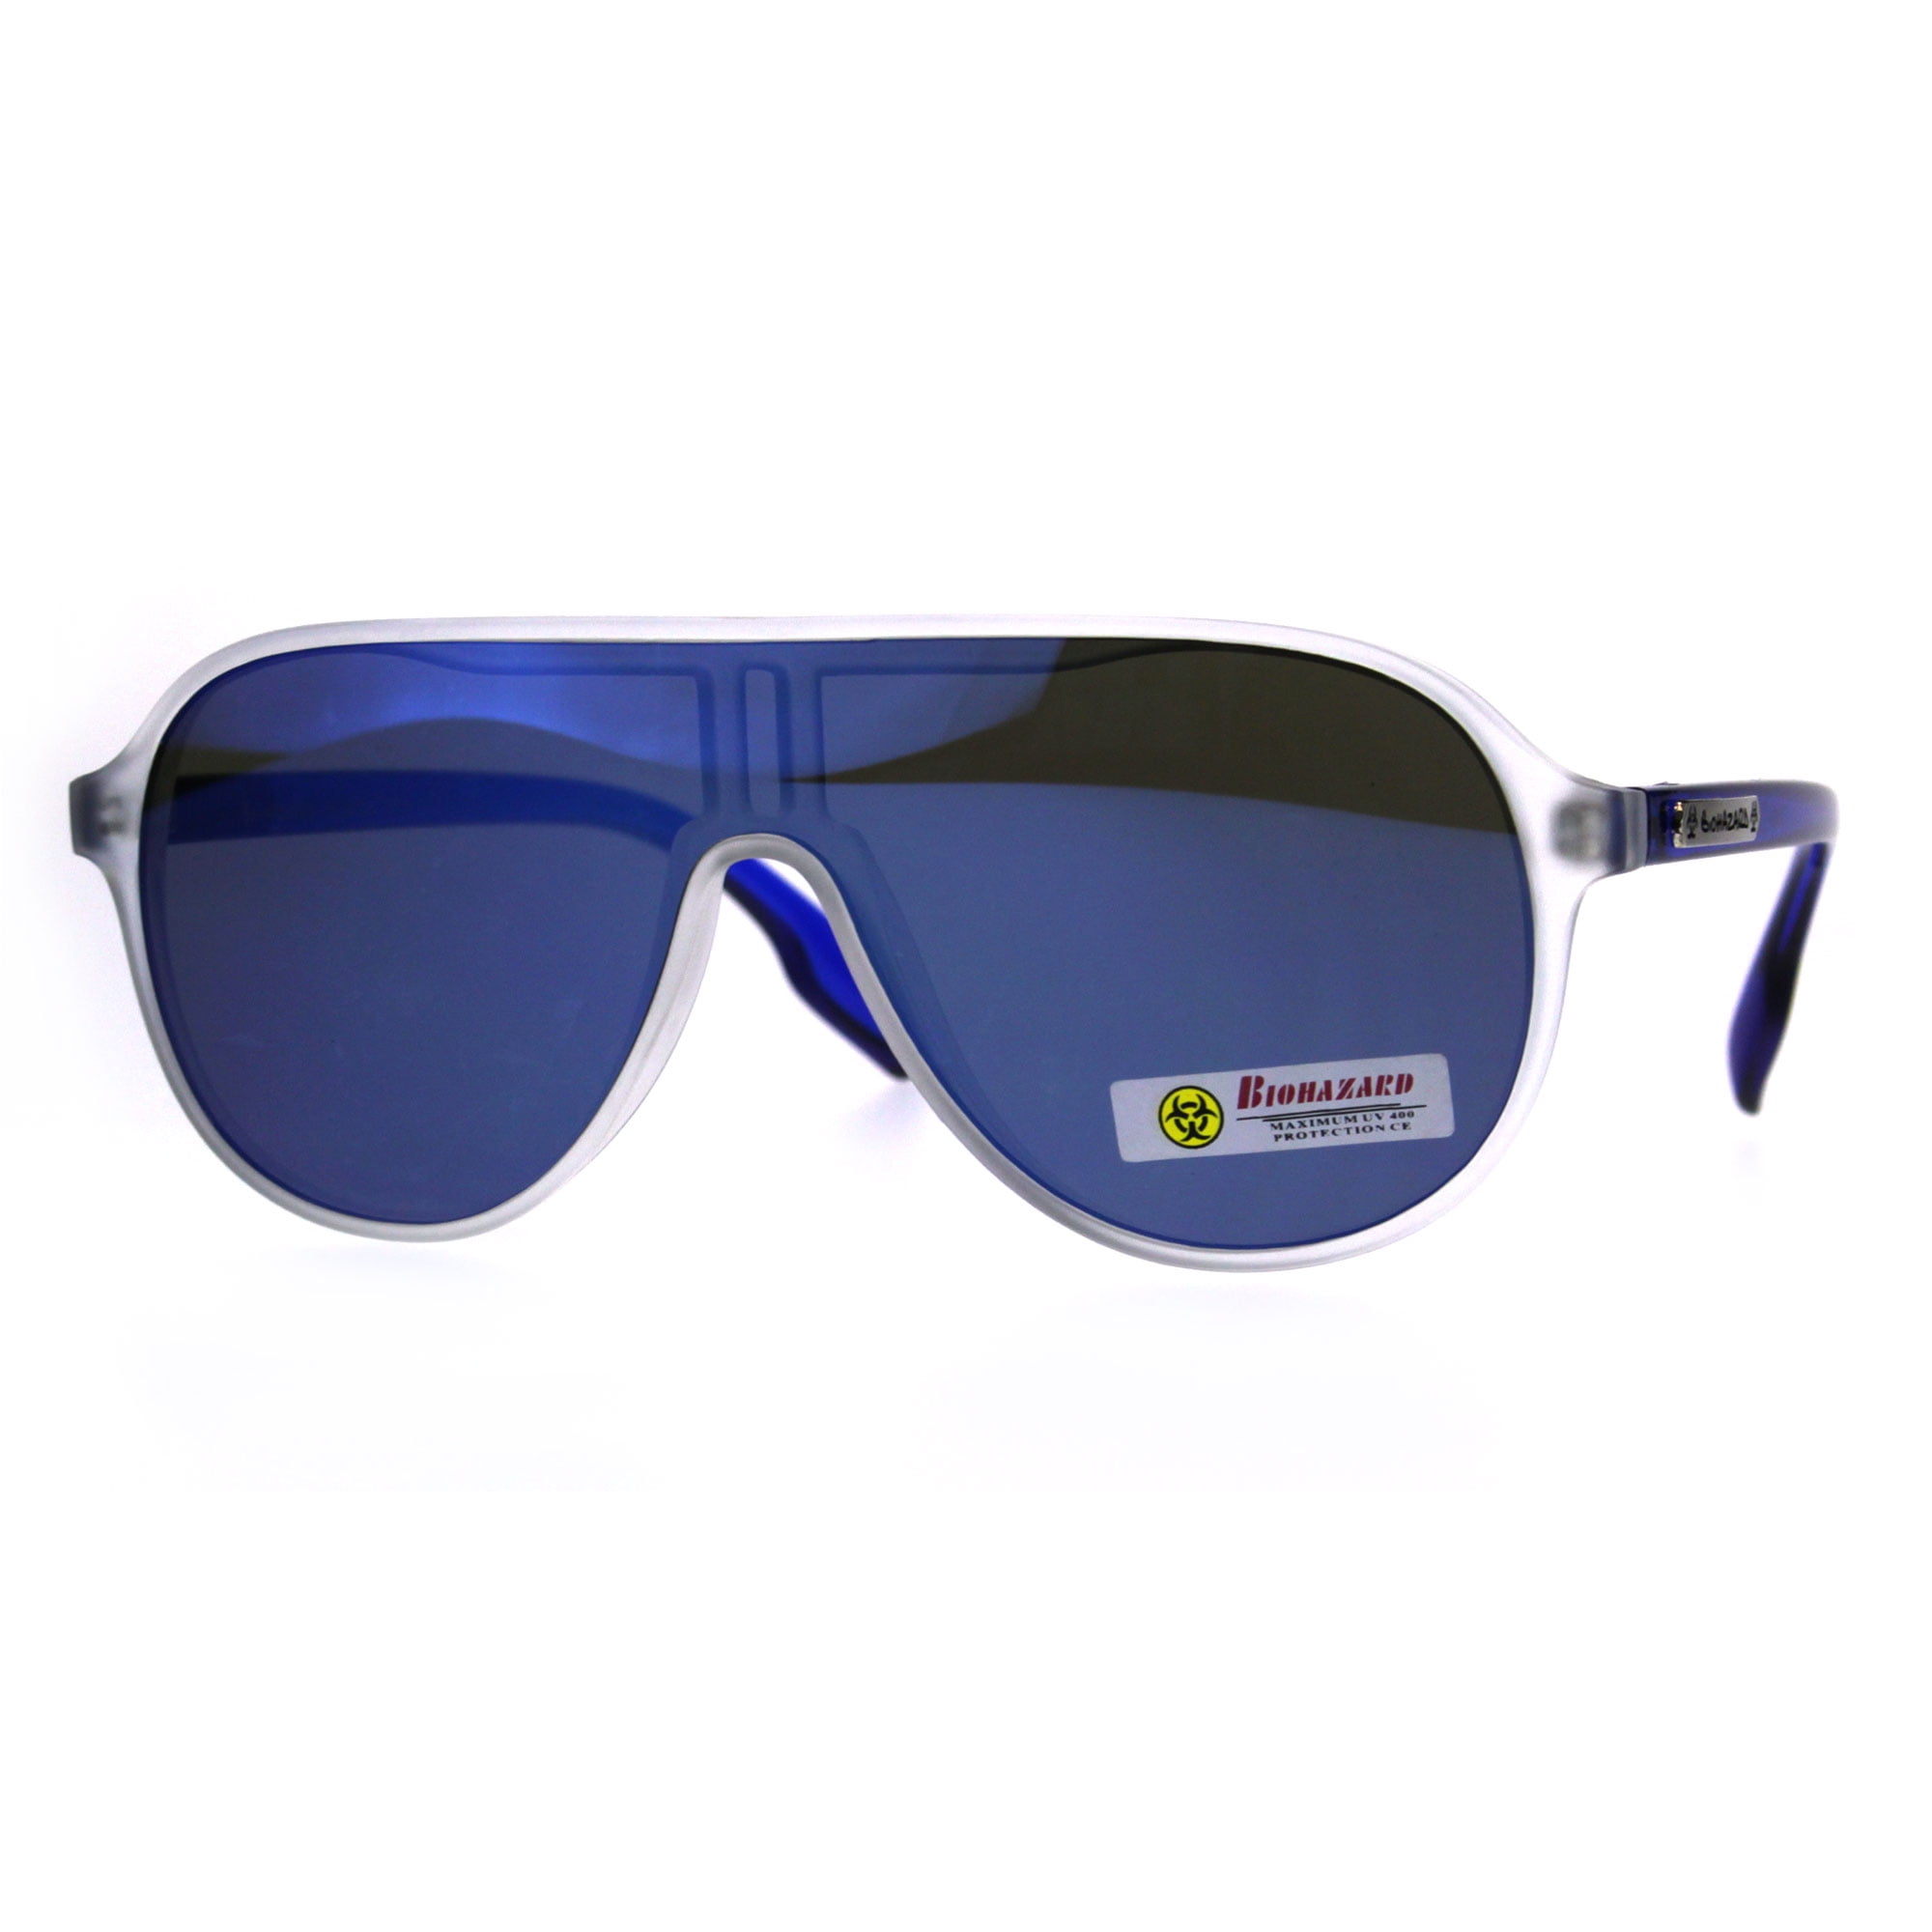 Biohazard Sunglasses Unisex Sports Round Racer Aviator Shades UV 400 